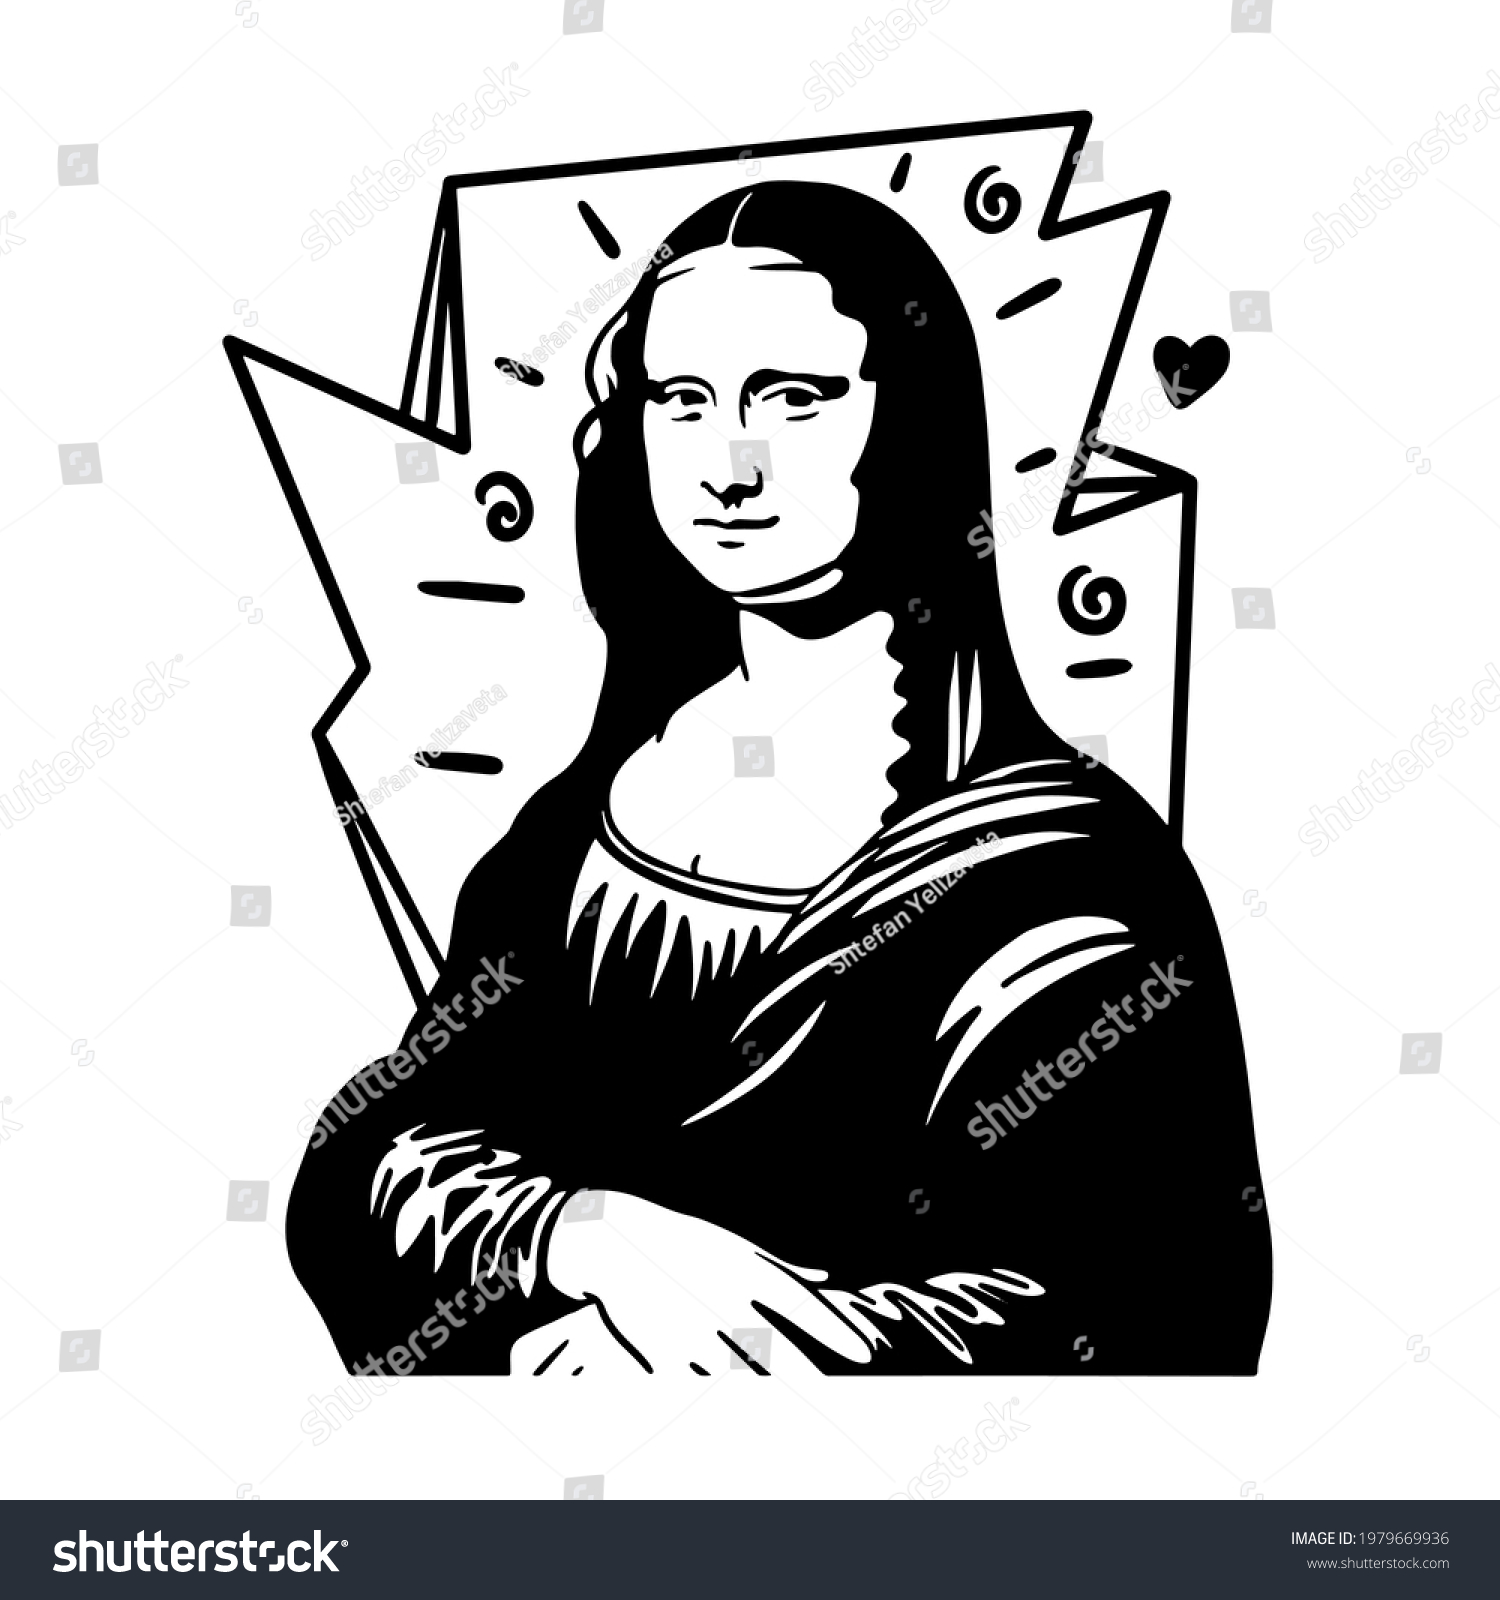 SVG of Leonardo da Vinci's Mona Lisa vector File for cutting vinyl decal svg